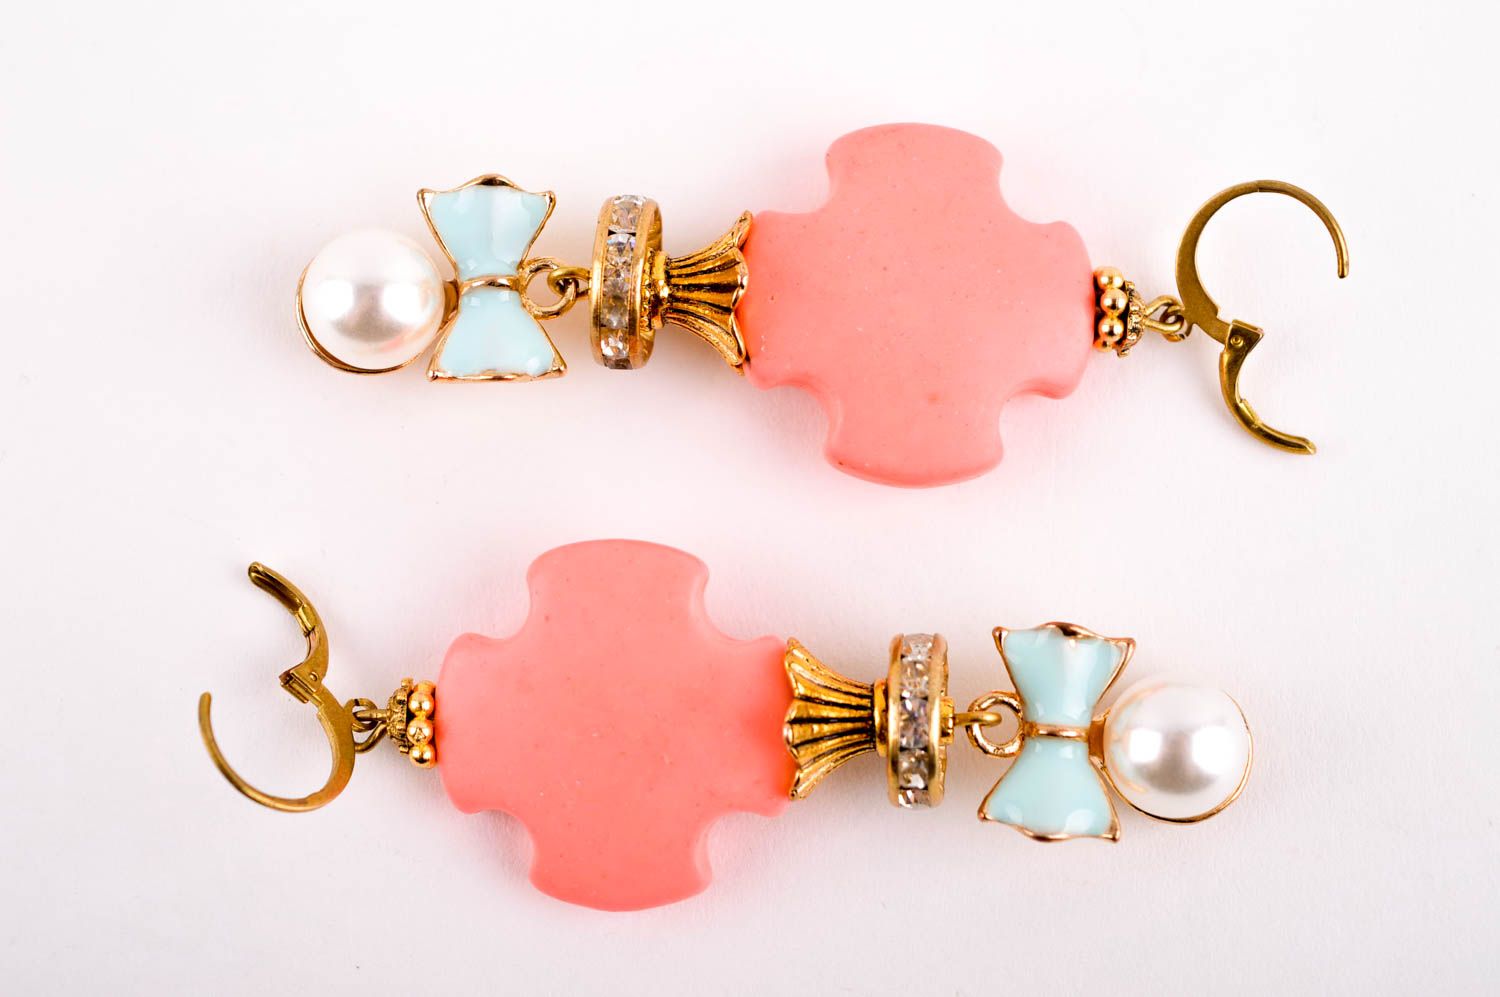 Handmade earrings designer earrings with charms pearl earrings for women photo 5